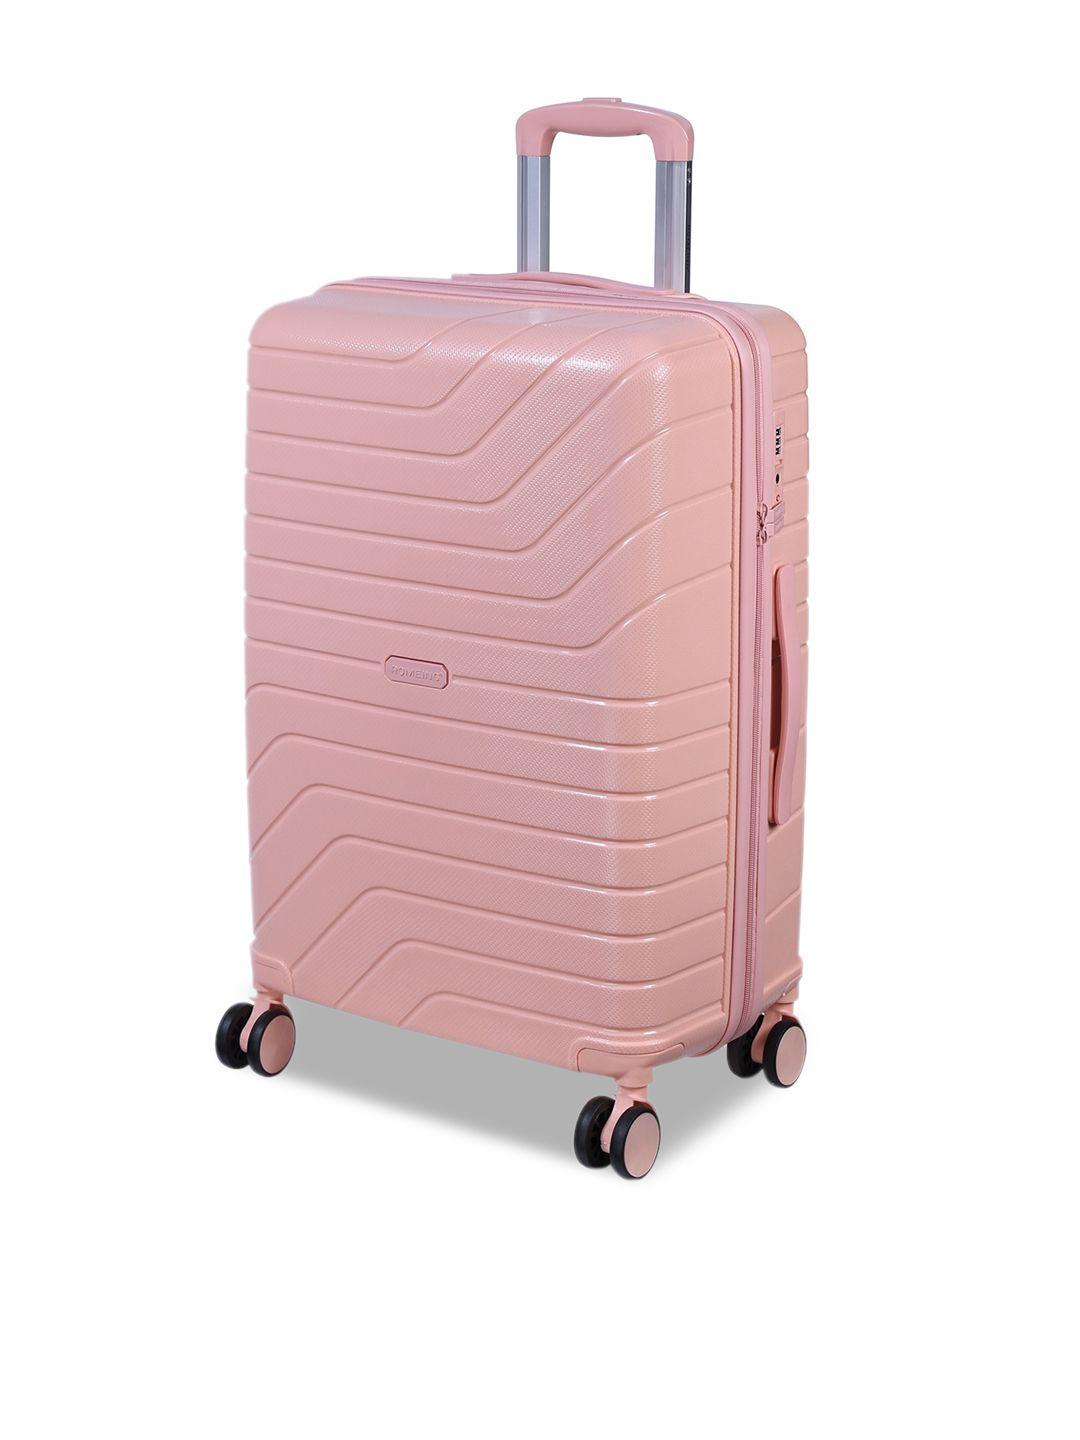 romeing tuscany pink textured hard sided polypropylene medium trolley suitcase